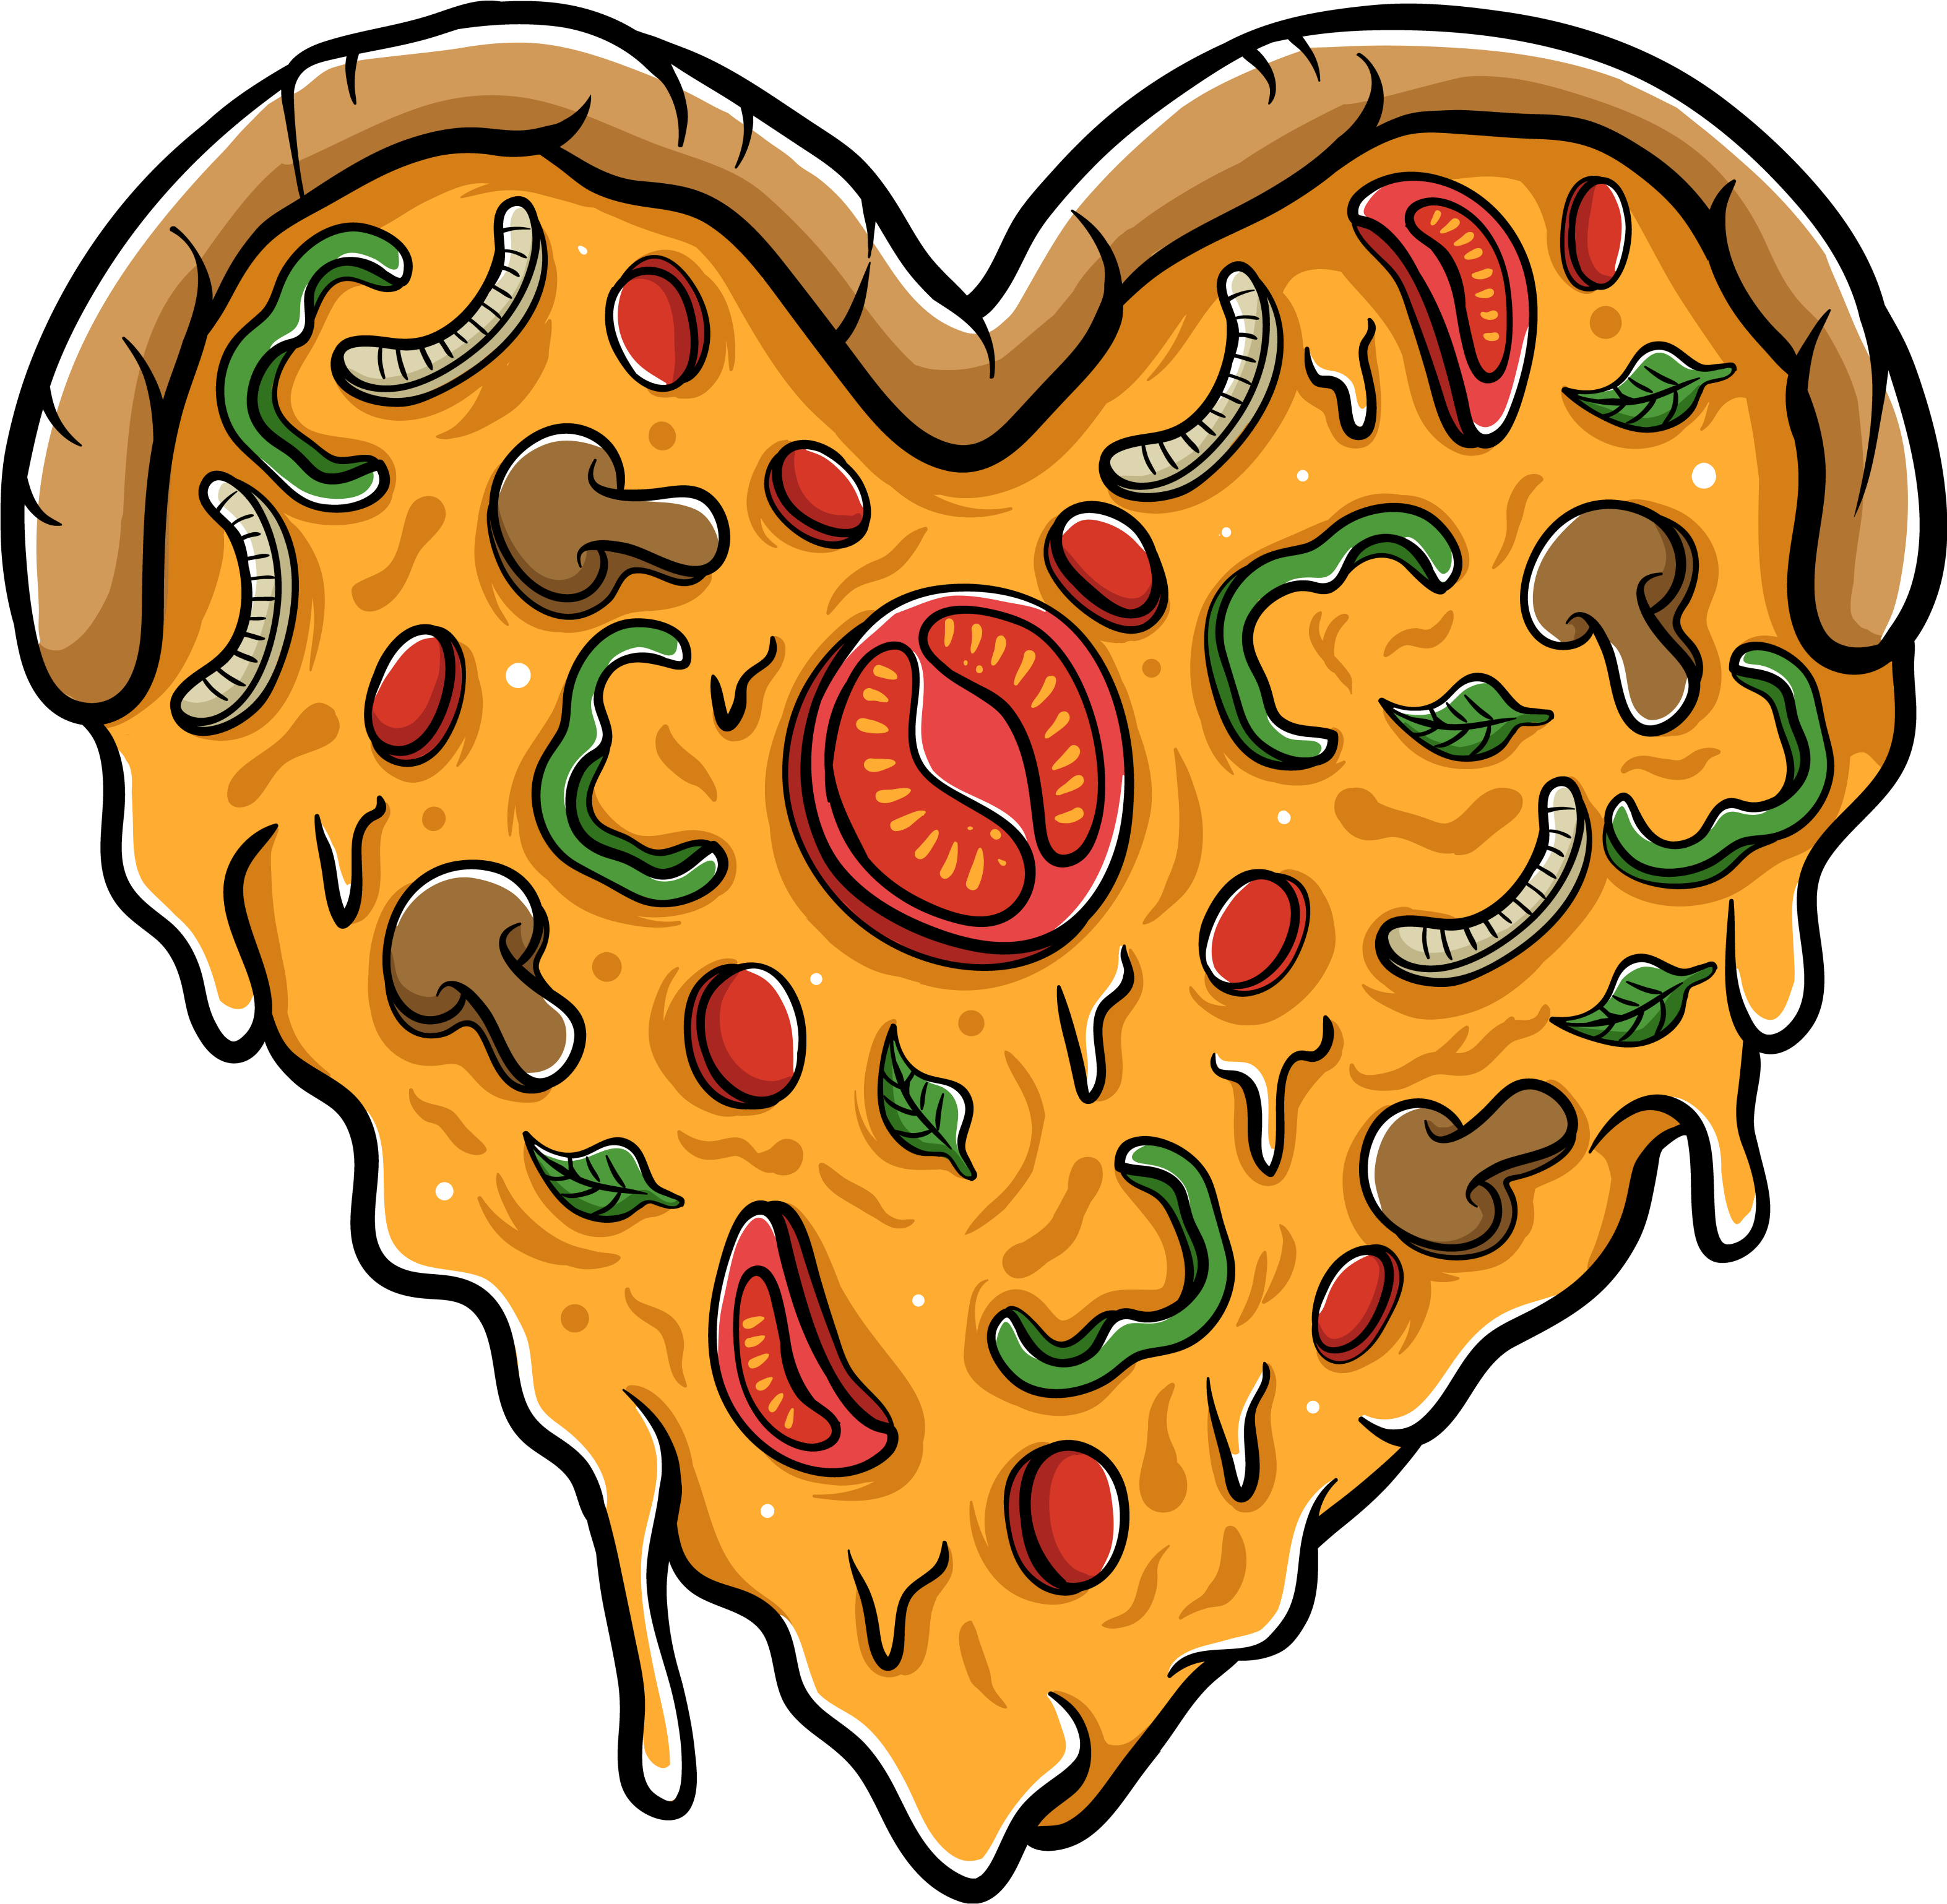 Игра такая пицца. Пицца любовь. Пицца в форме сердца. Пицца стикер. Пицца иллюстрация.